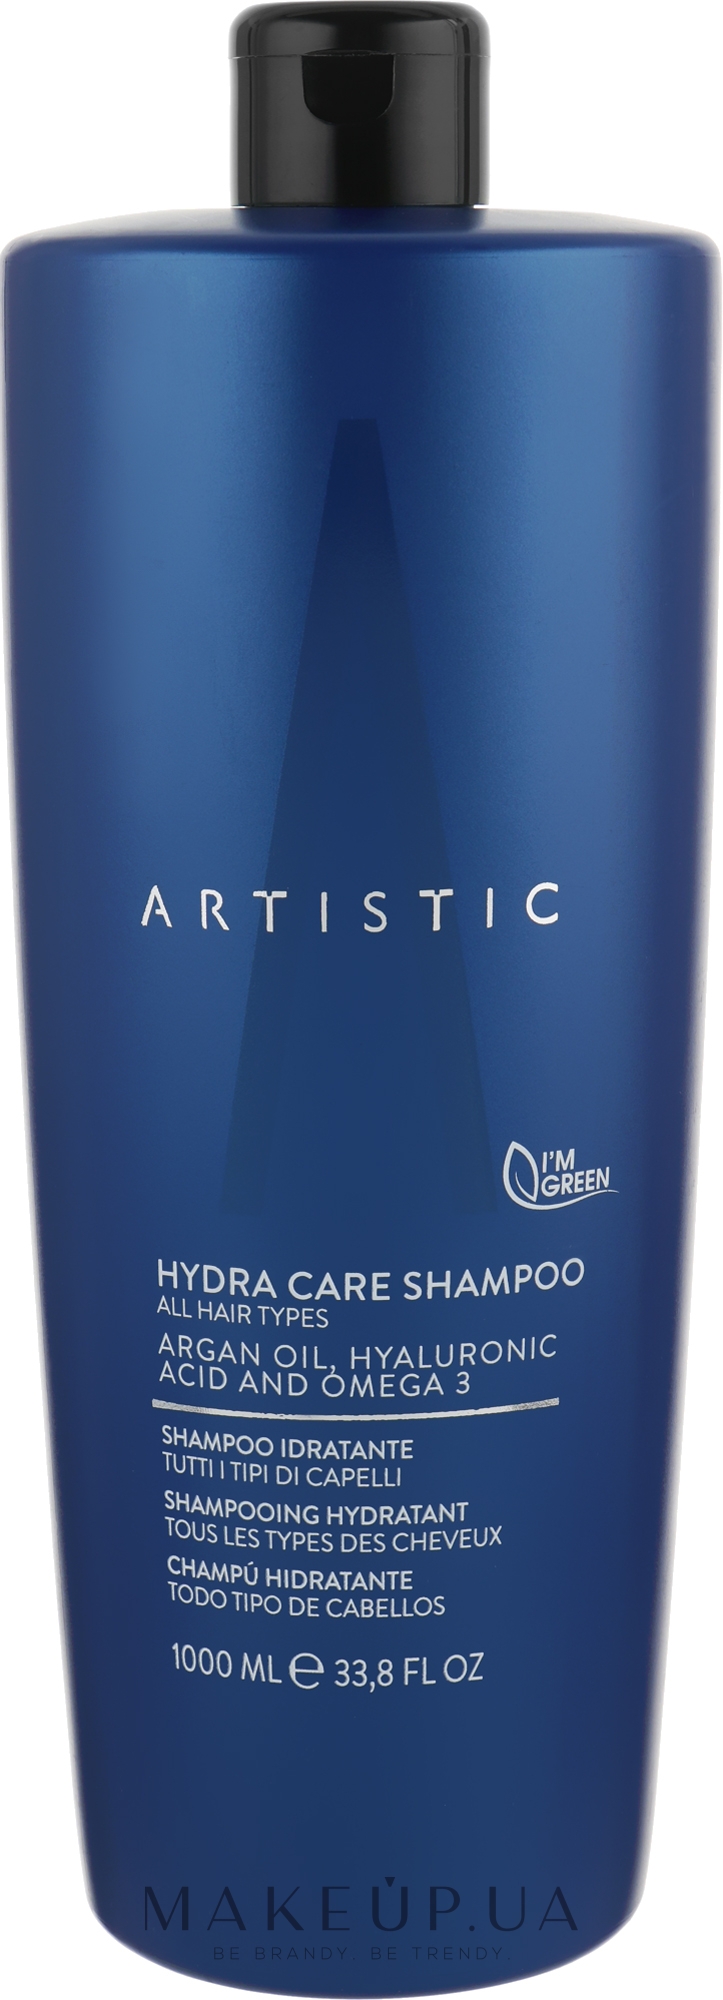 Увлажняющий шампунь для волос - Artistic Hair Hydra Care Shampoo — фото 1000ml